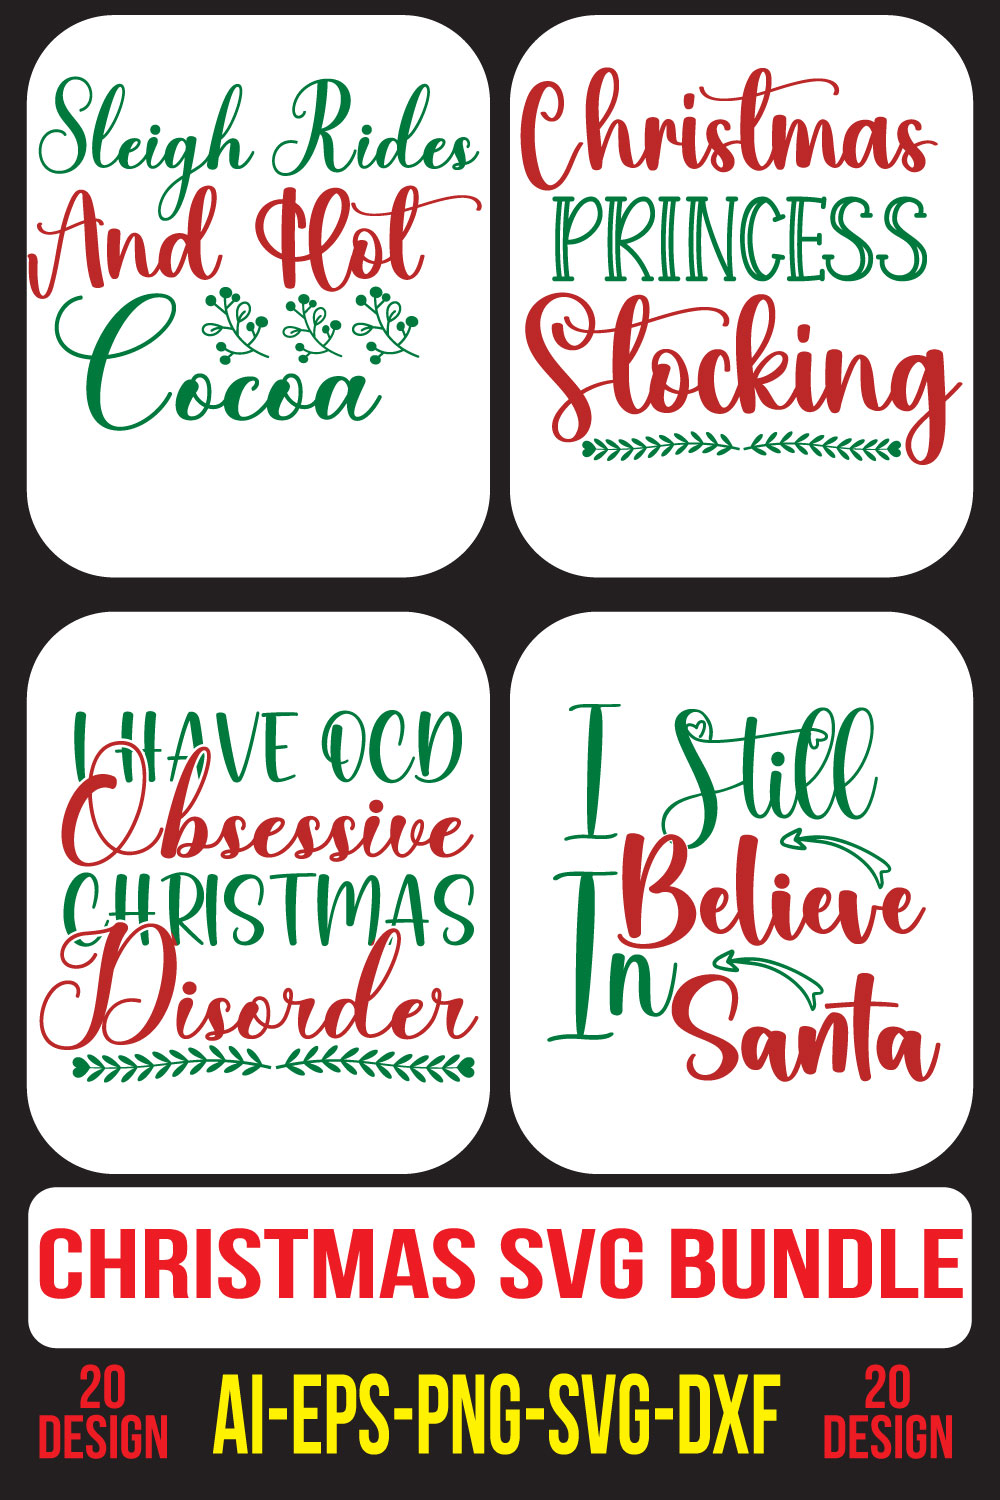 Christmas SVG Bundle pinterest preview image.